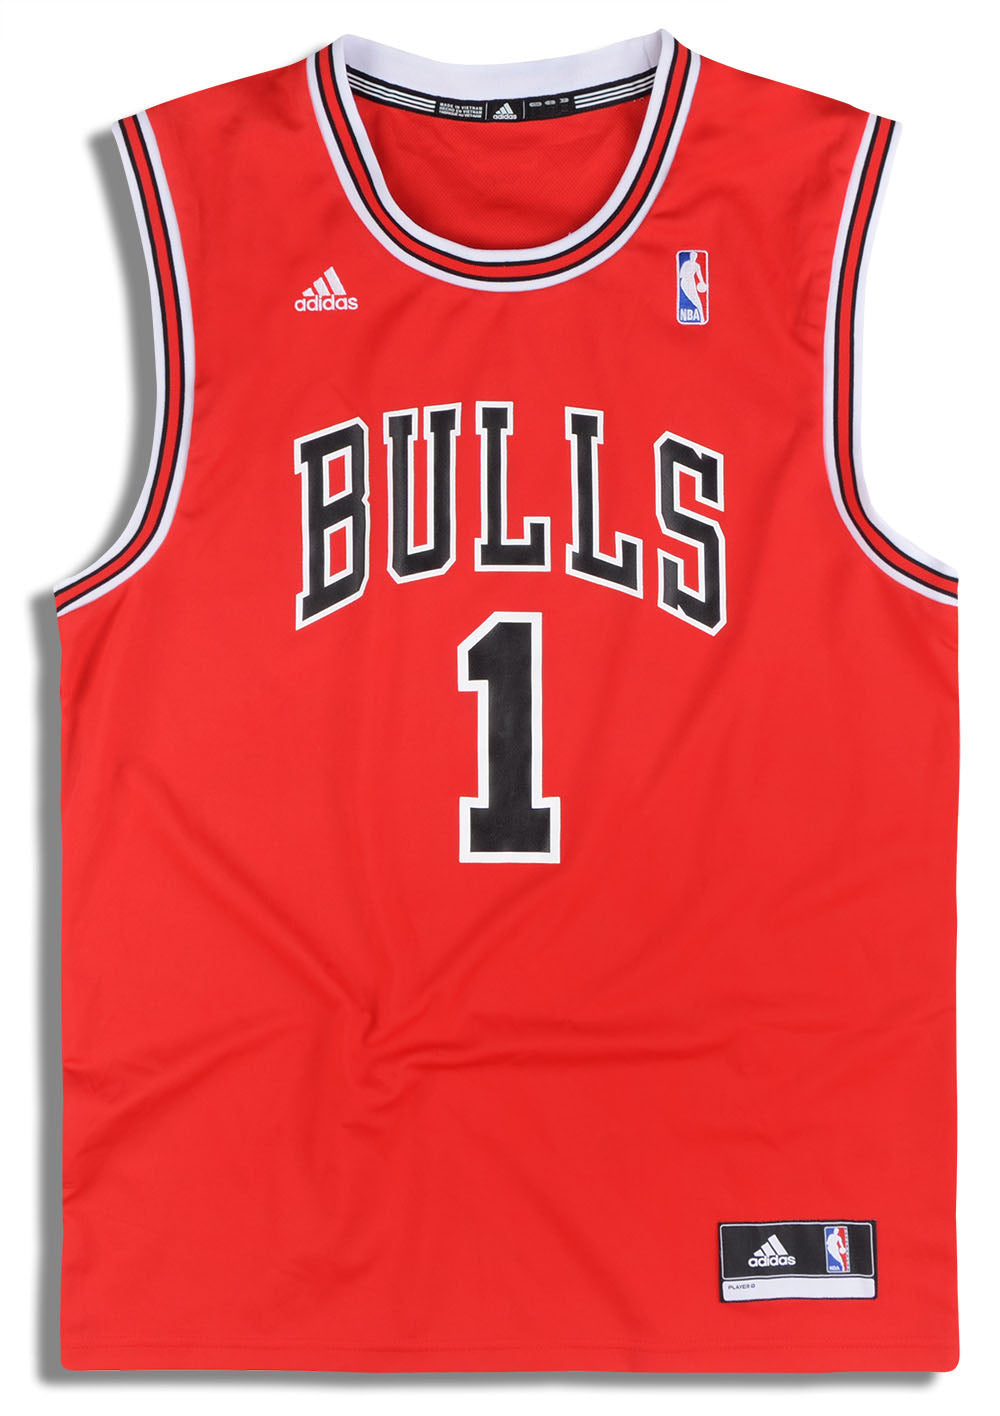 adidas, Shirts, Chicago Bulls Derrick Rose Nba Basketball Jersey